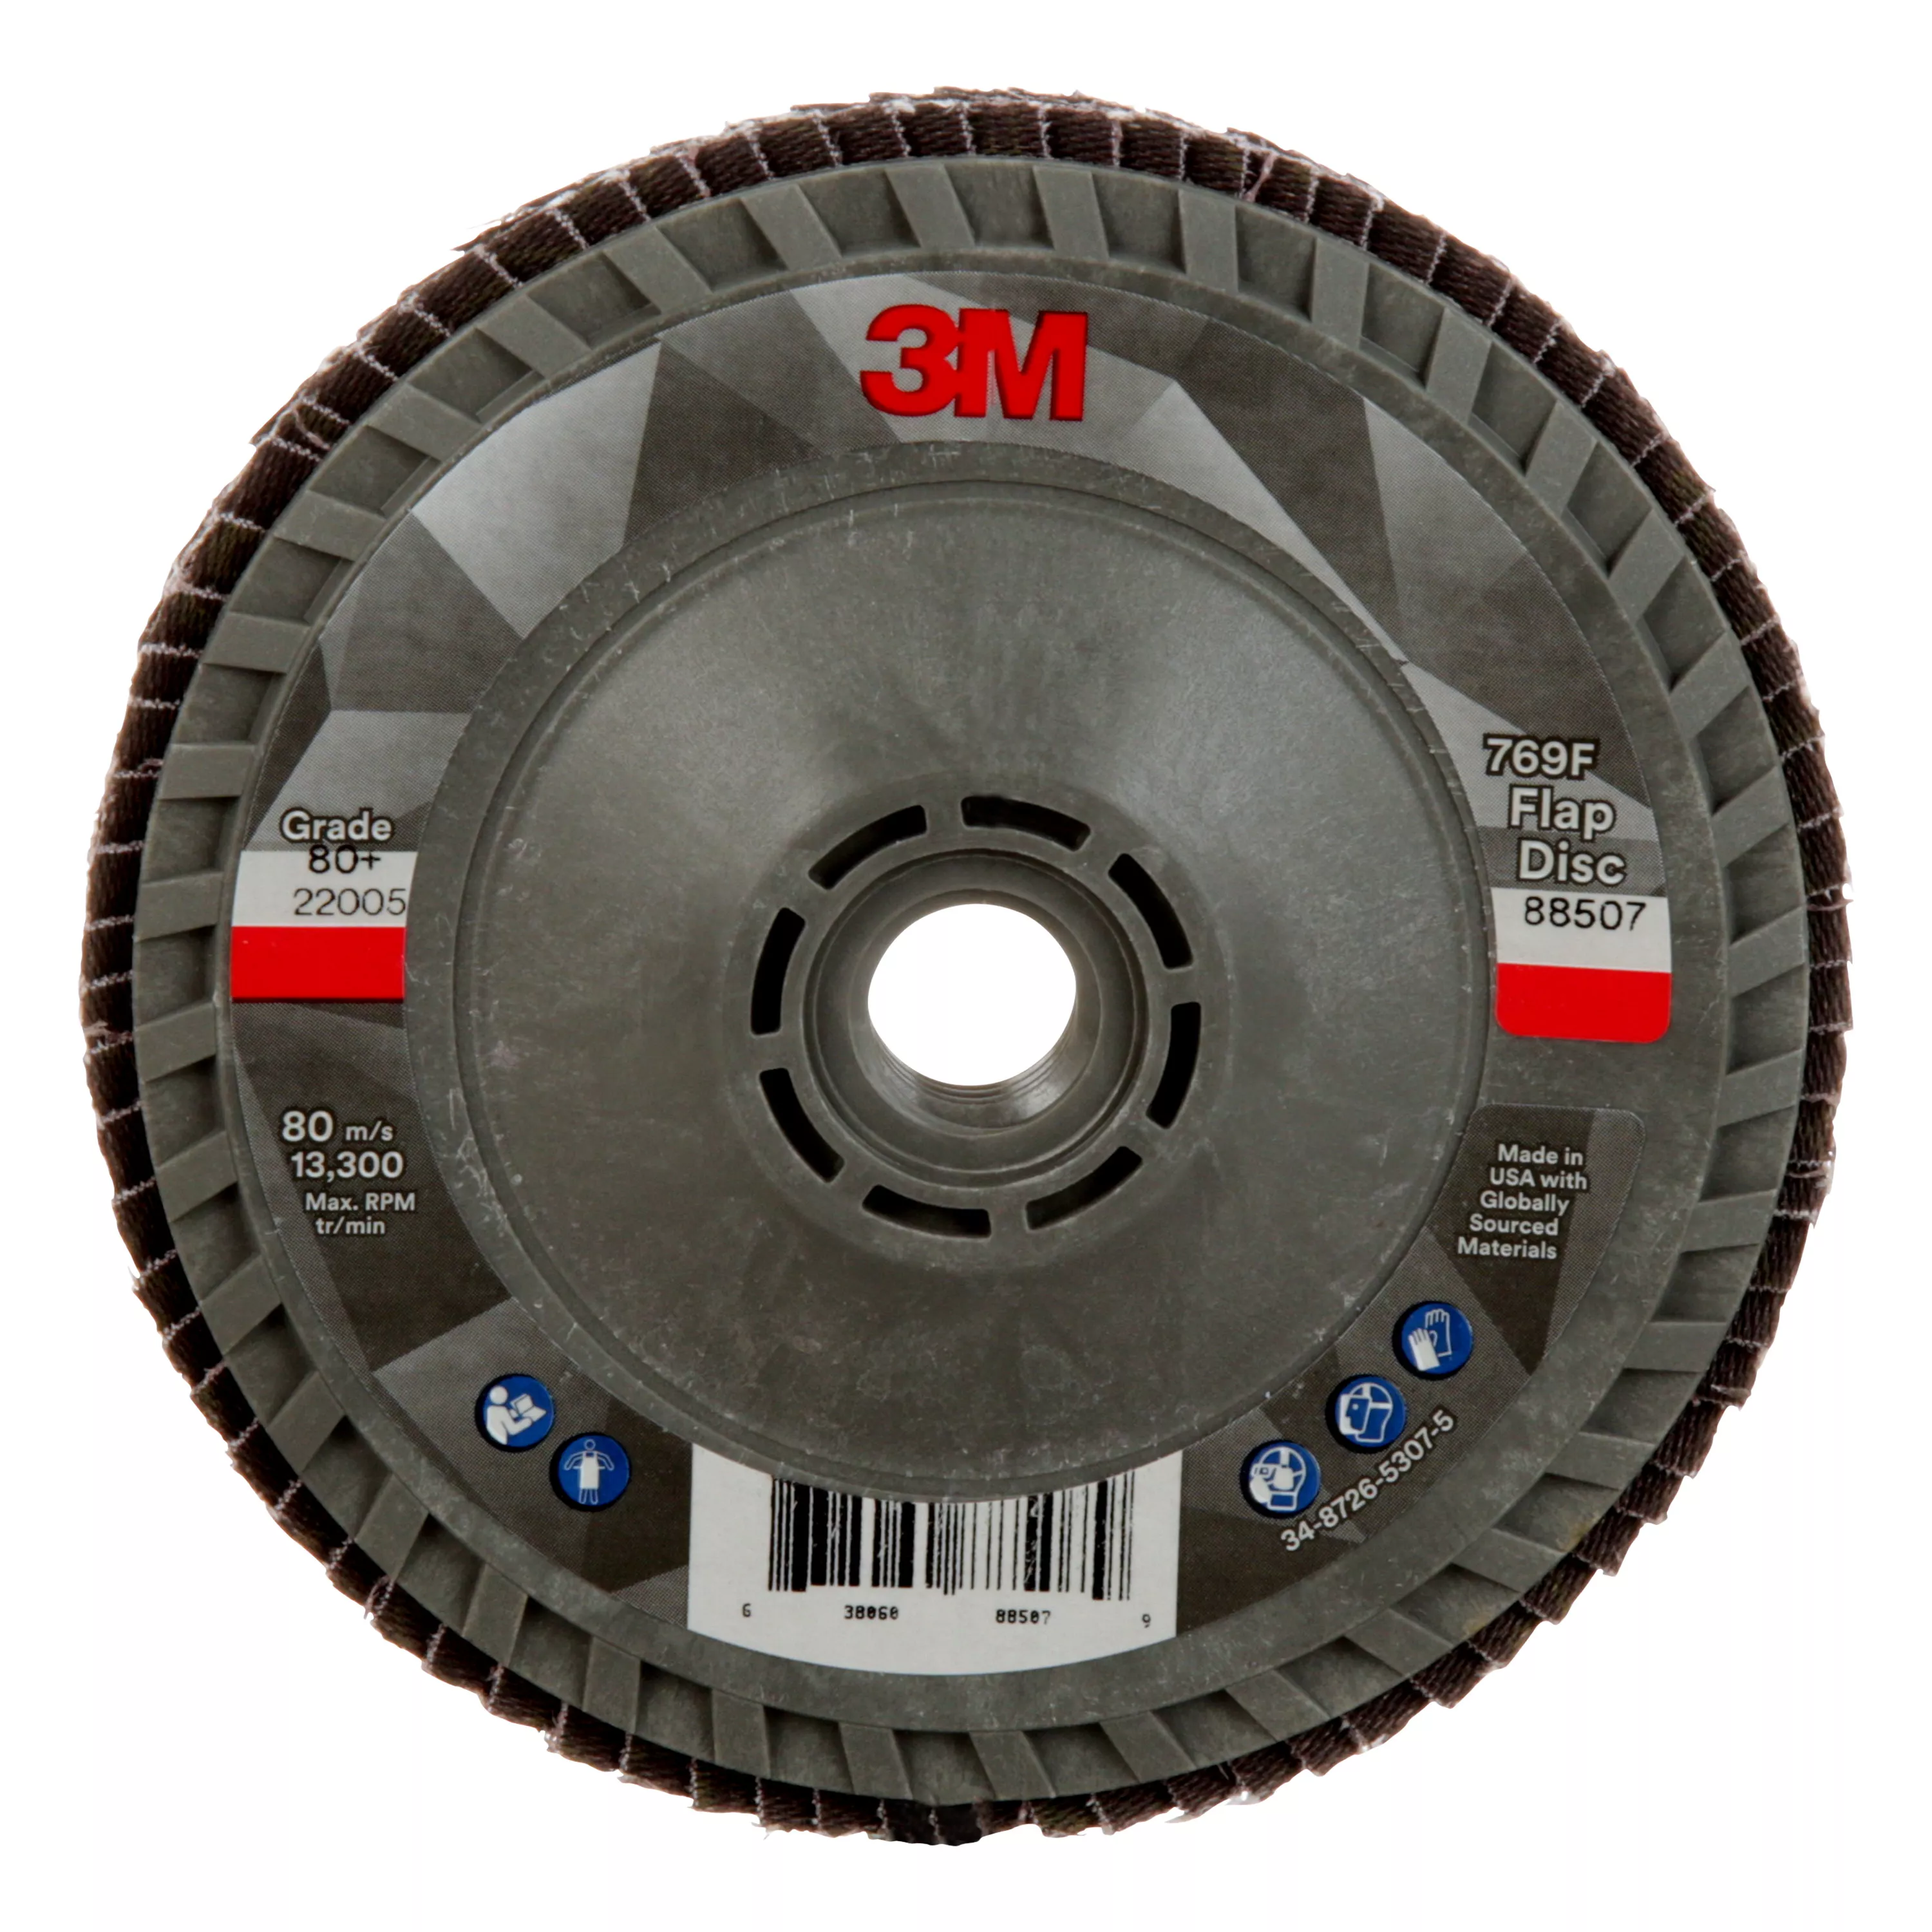 SKU 7100243873 | 3M™ Flap Disc 769F